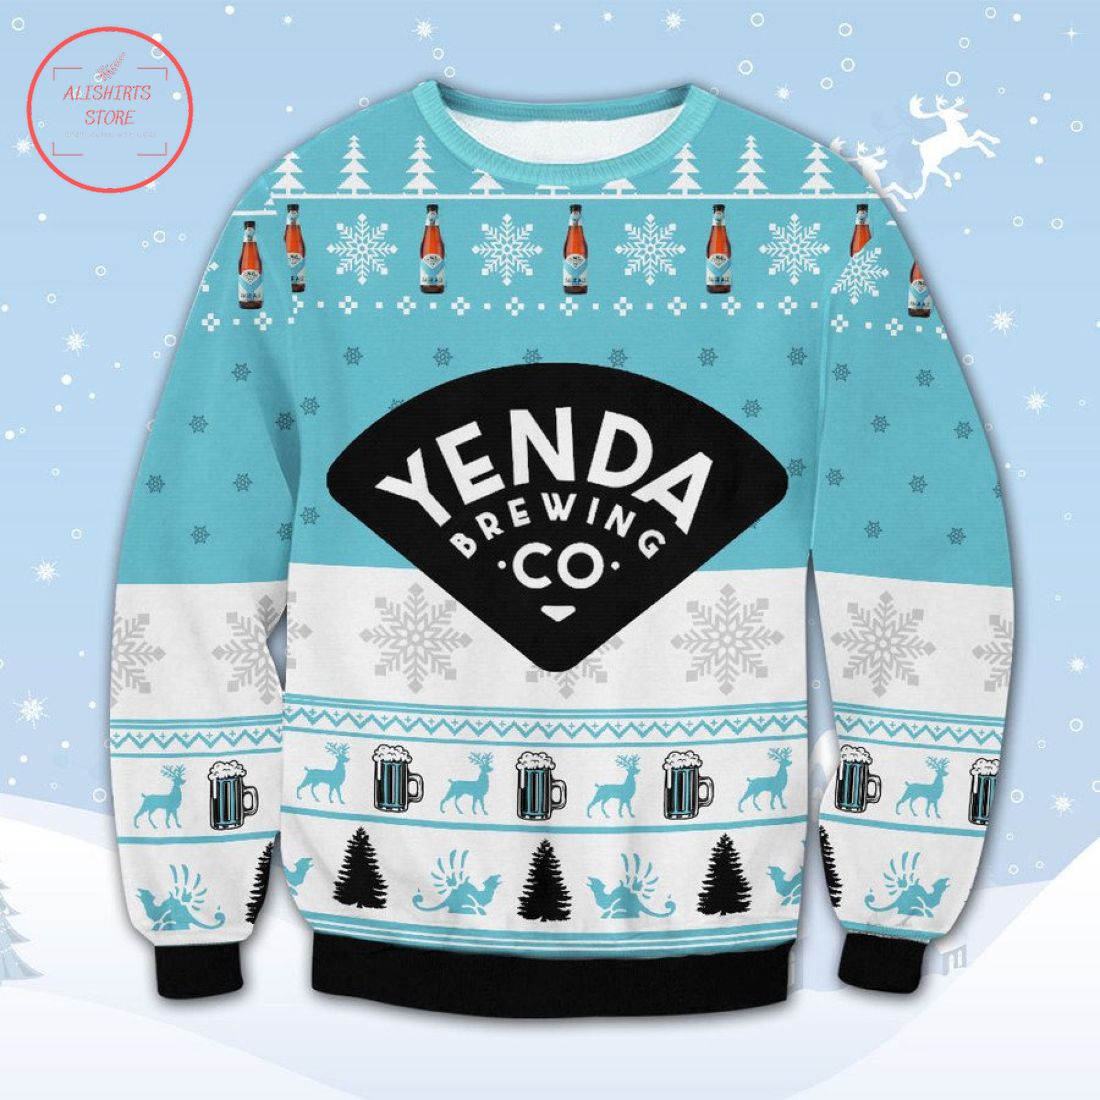 Yenda Pale Ale Ugly Christmas Sweater